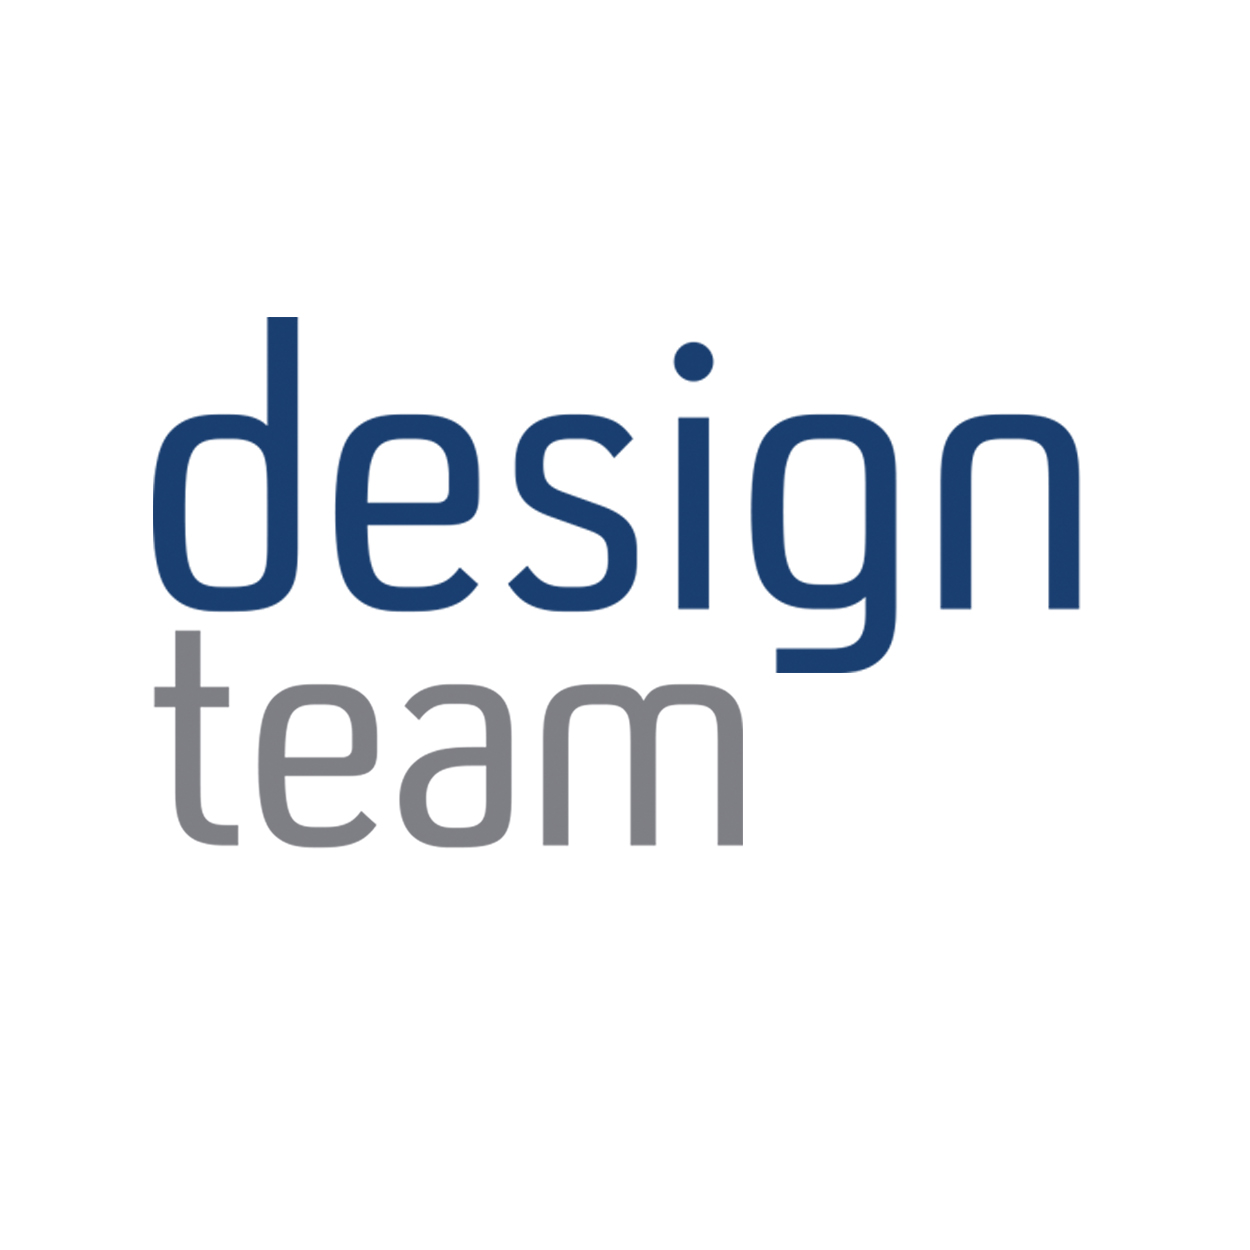 We're launching Design Team!